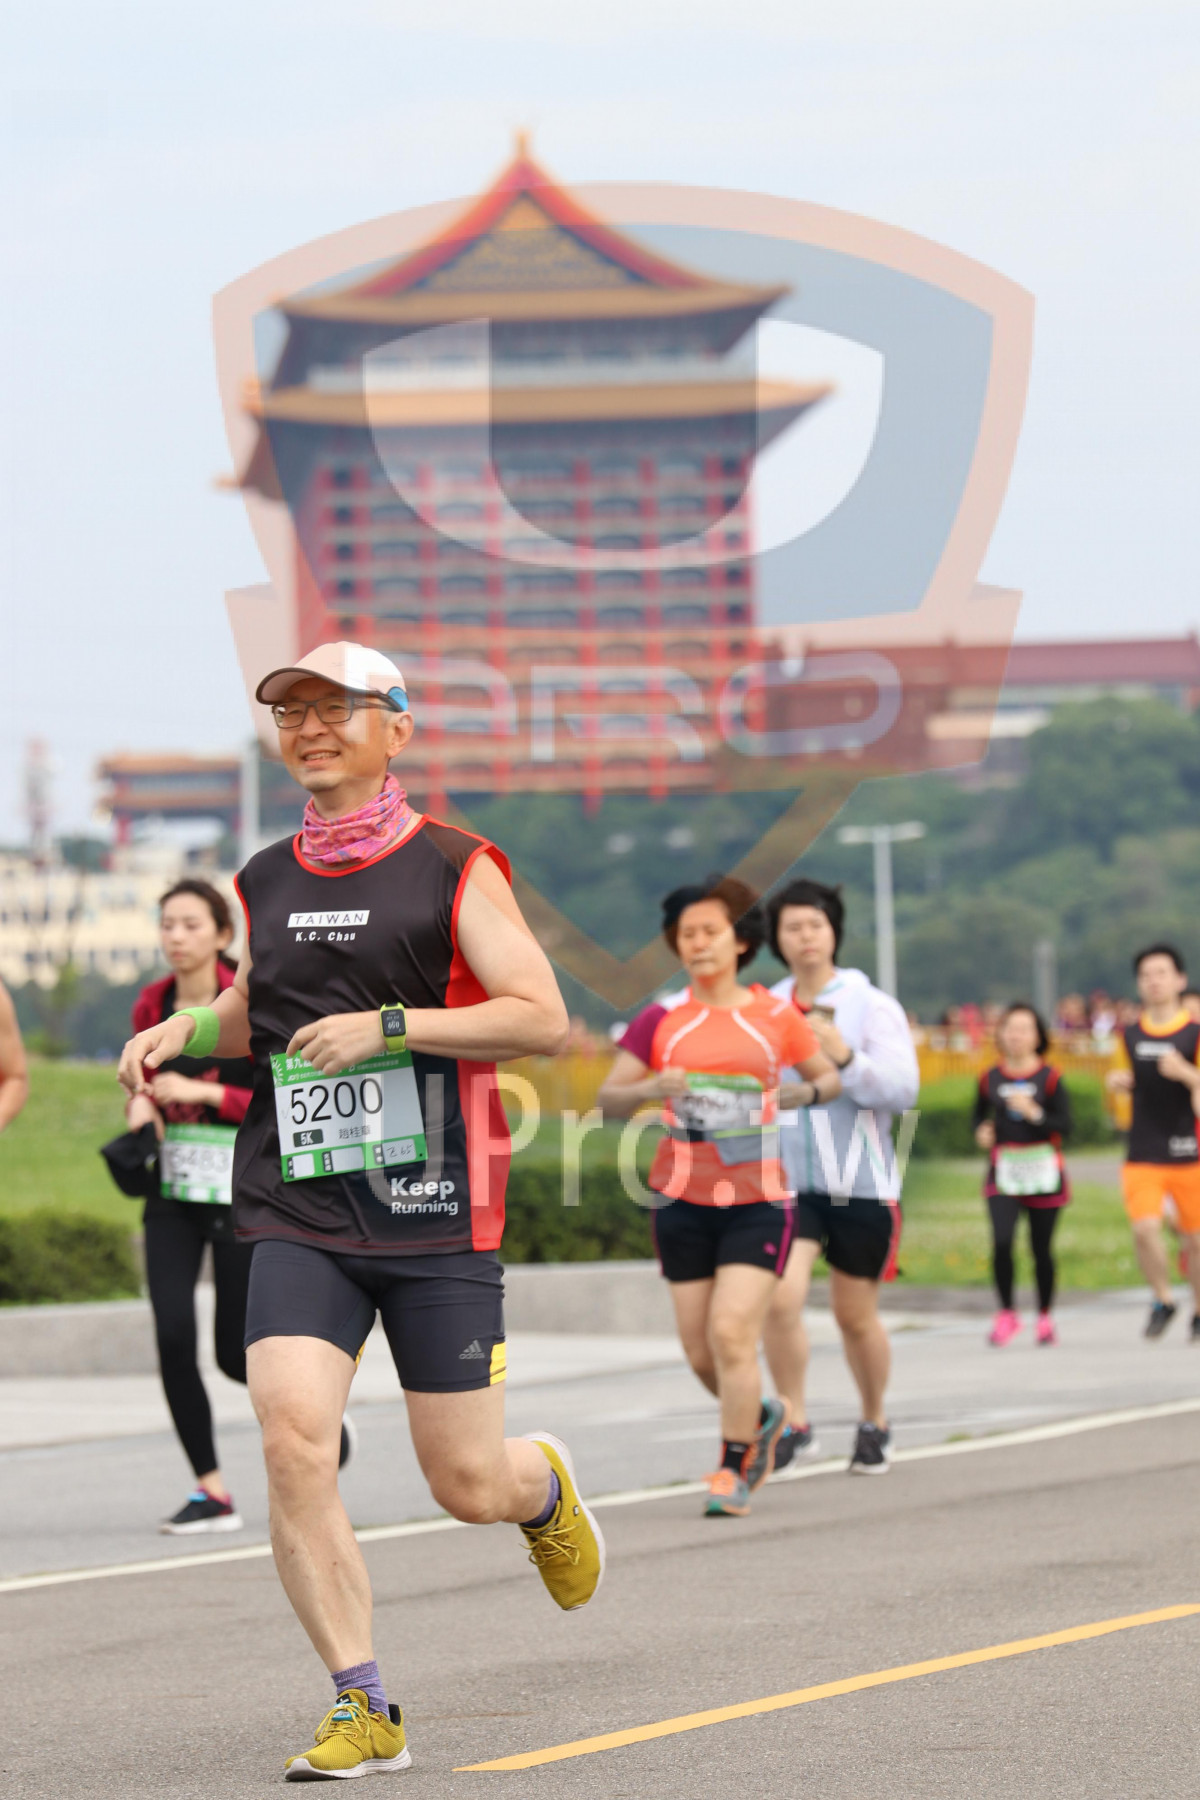 AIWA,K.C. Chau,5200,Keep,Running|2018 第九屆阿甘盃公益路跑|Soryu Asuka Langley